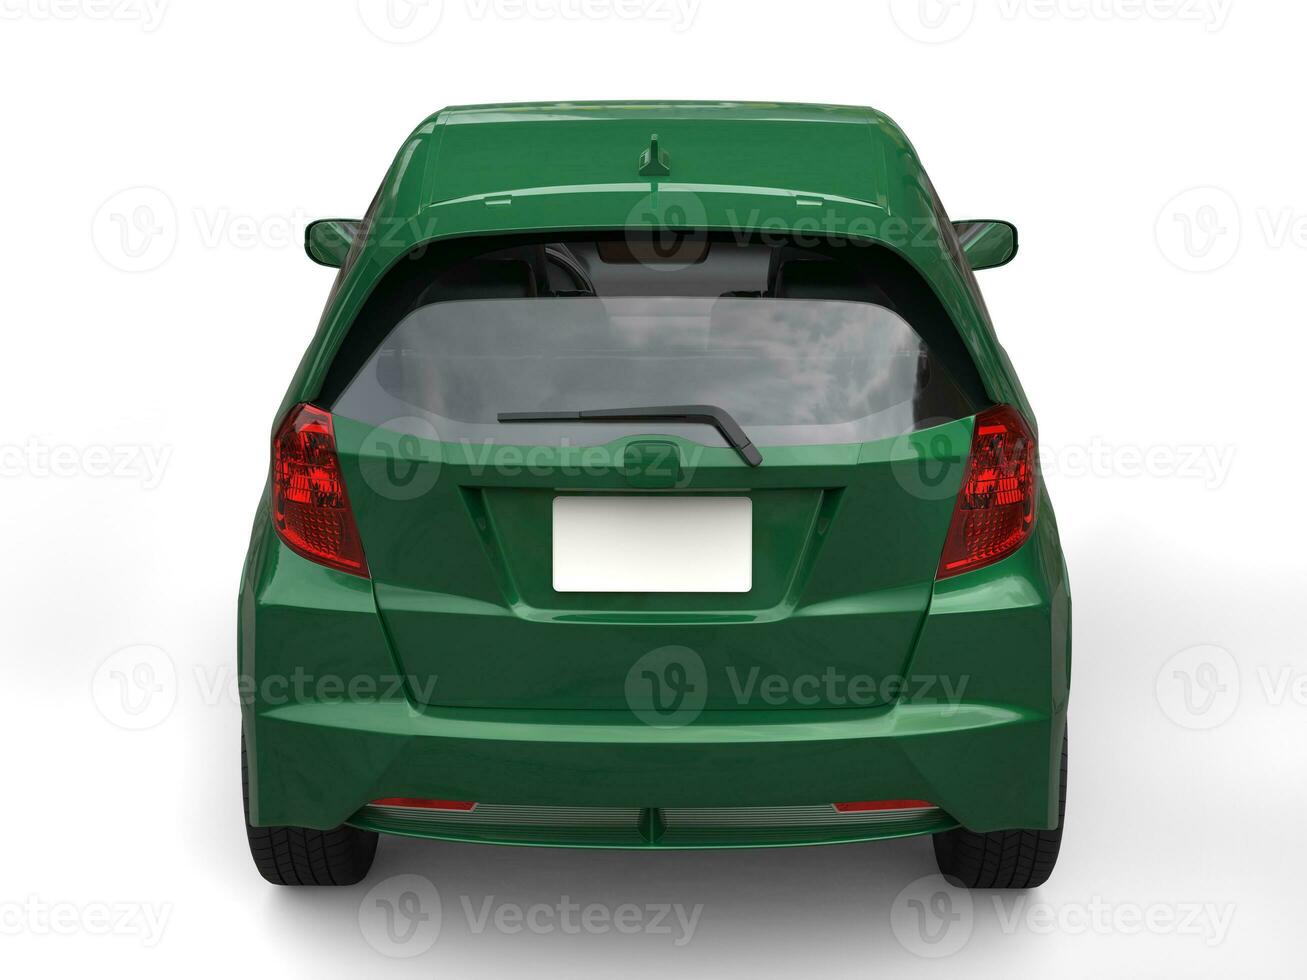 Dark green metallic modern compact car - back view photo